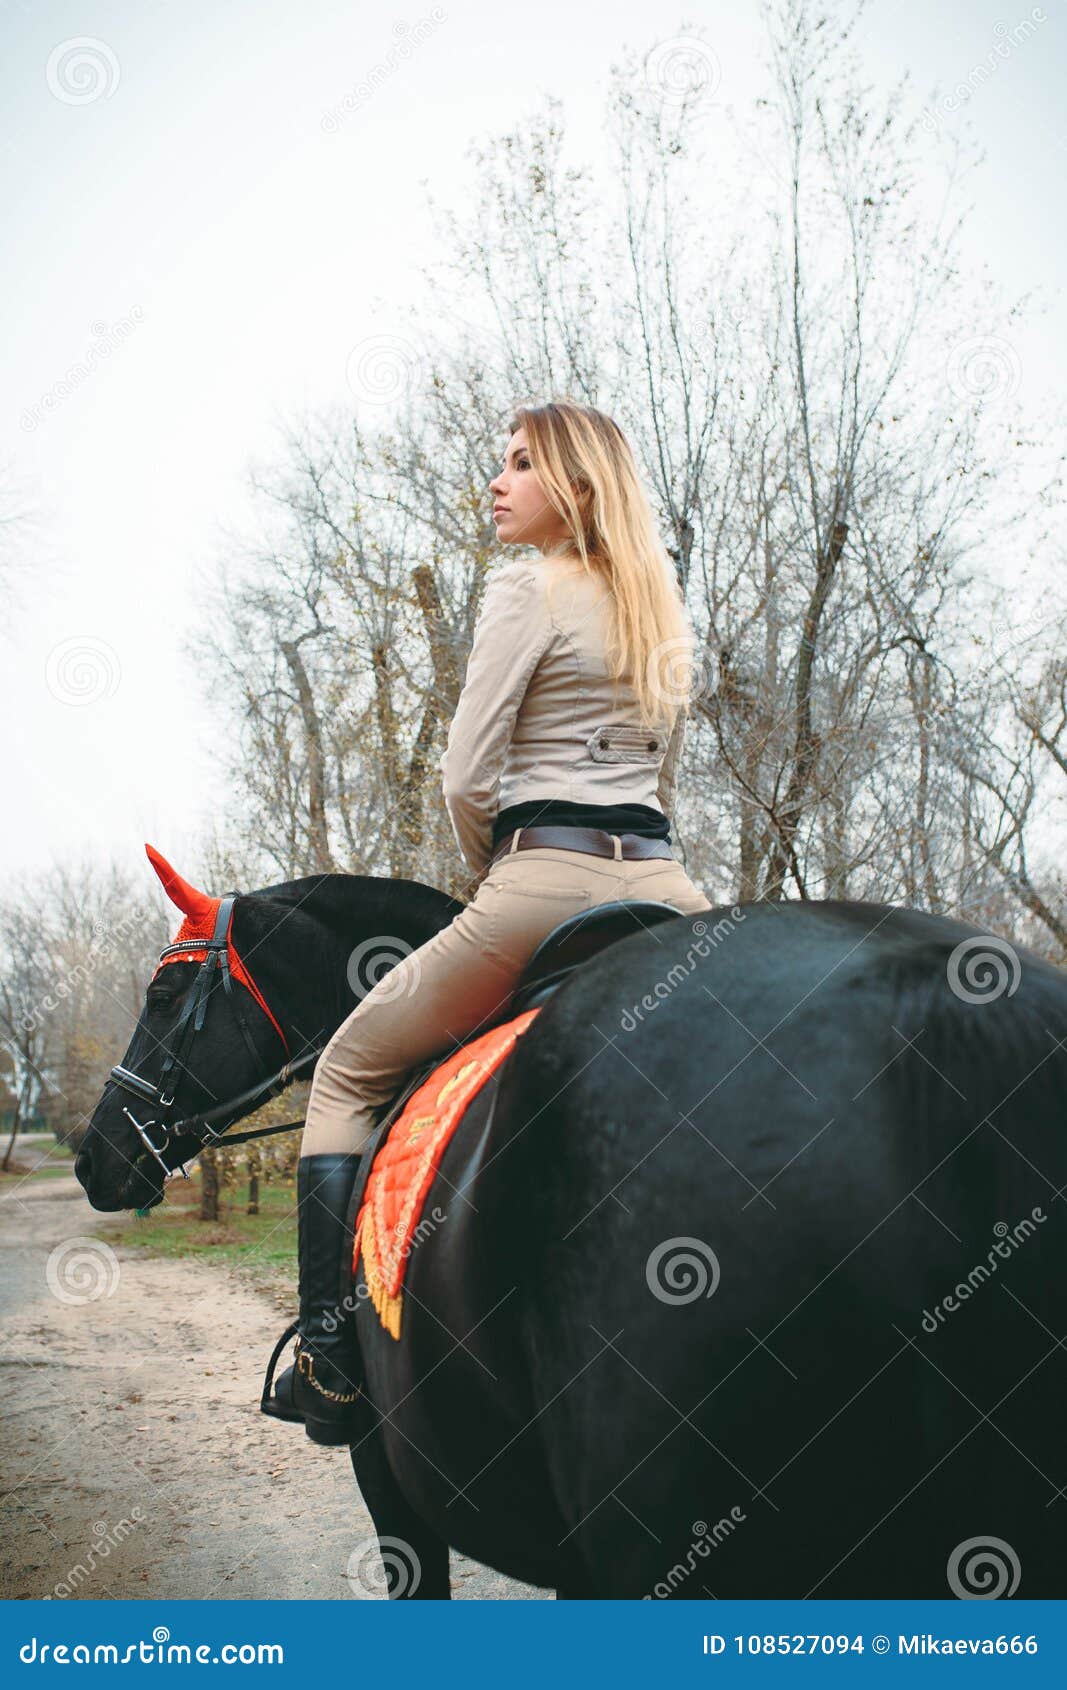 amateur blonde teen riding